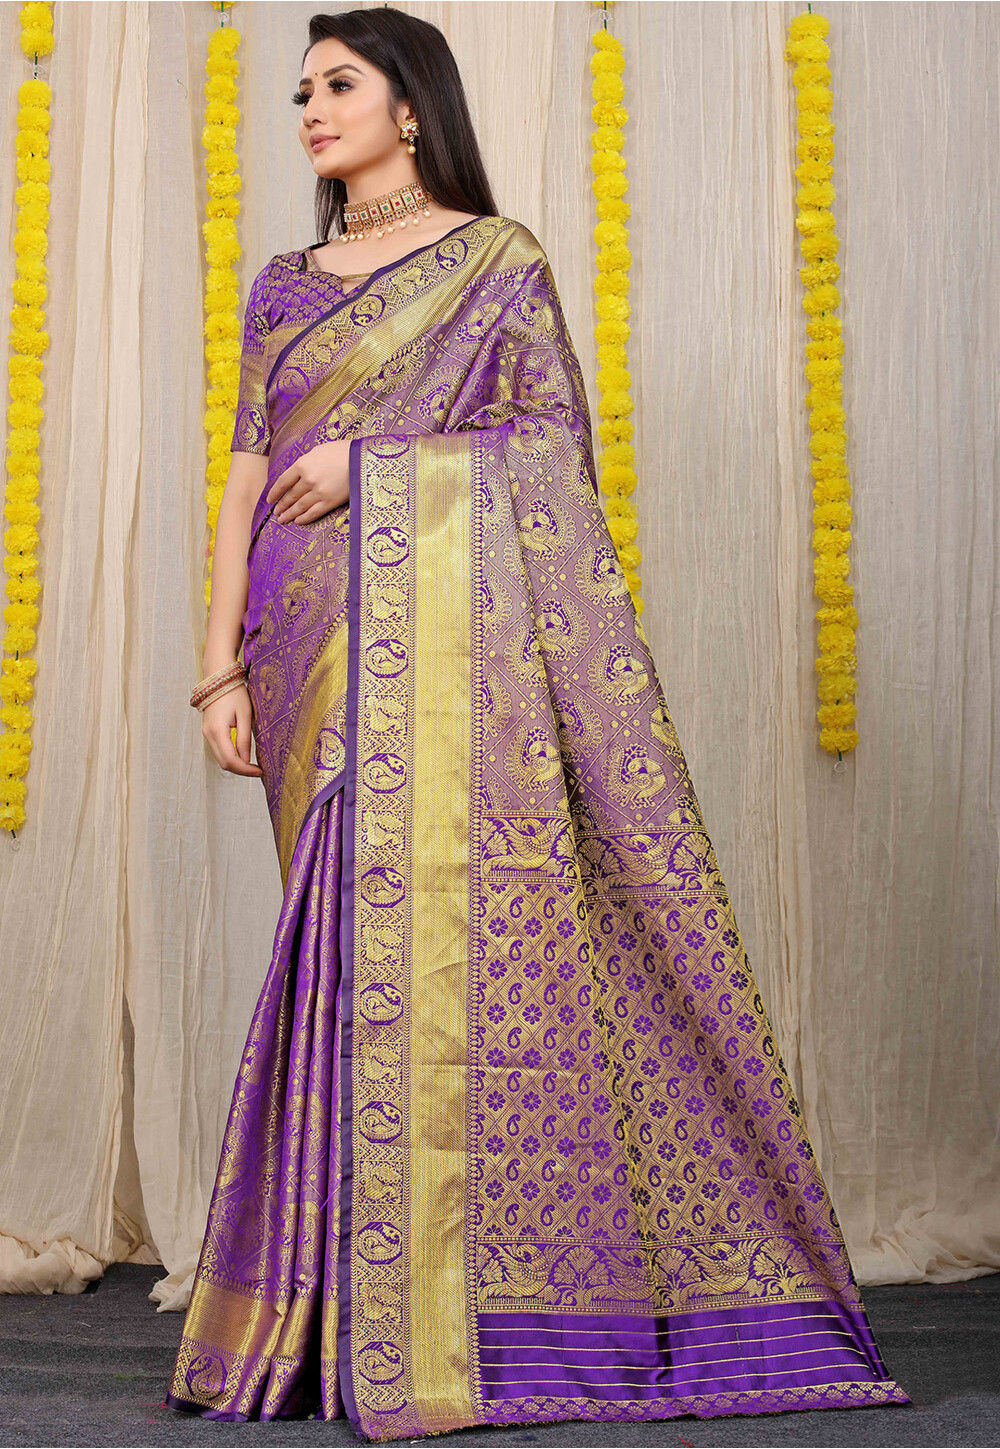  Indian Selections - Purple Art Silk Saree Sari Fabric India  Golden Border : Clothing, Shoes & Jewelry